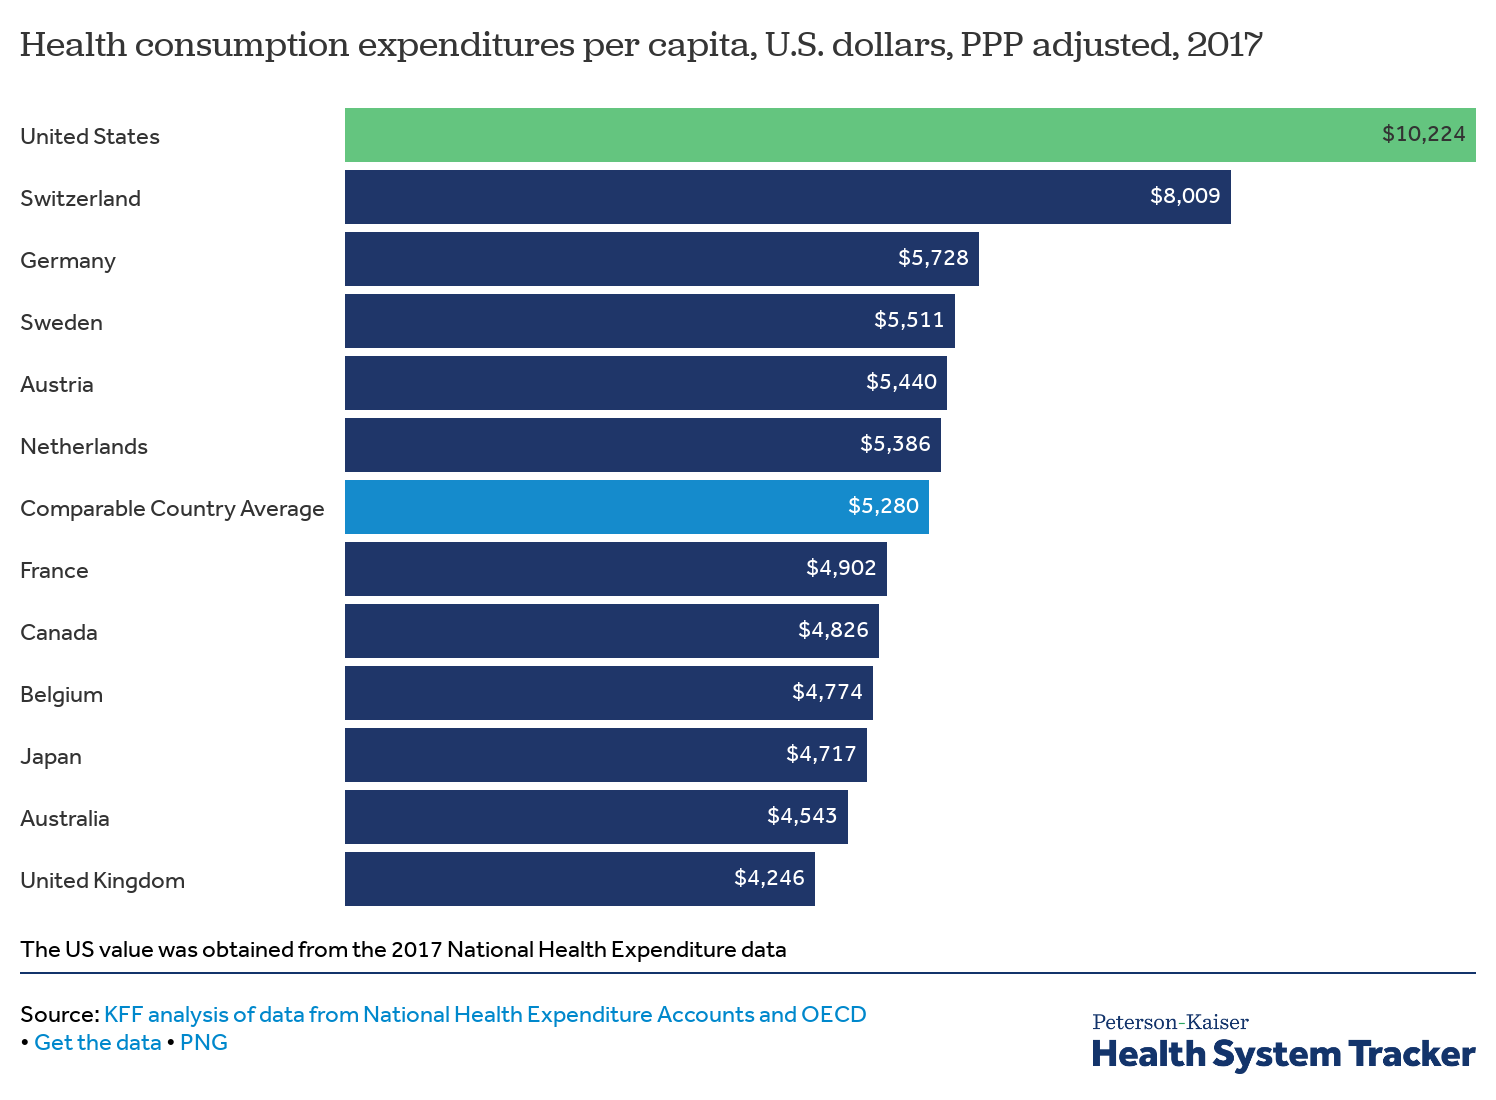 Health Care Costs Per Capita